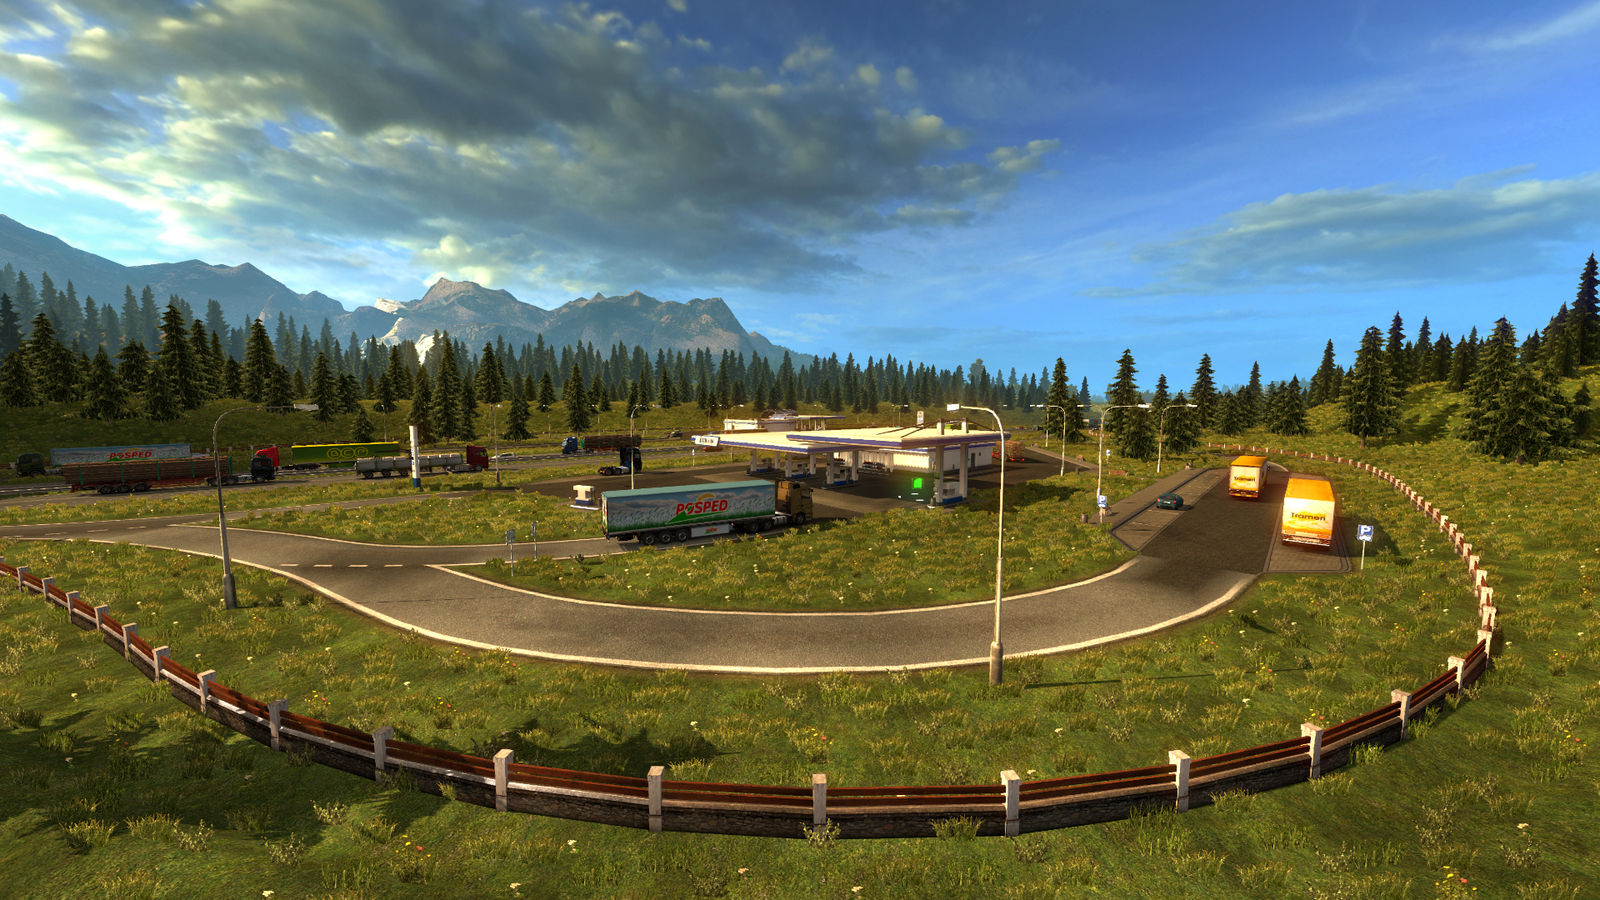 Euro Truck Simulator 2 GOTY (Steam) RU/CIS